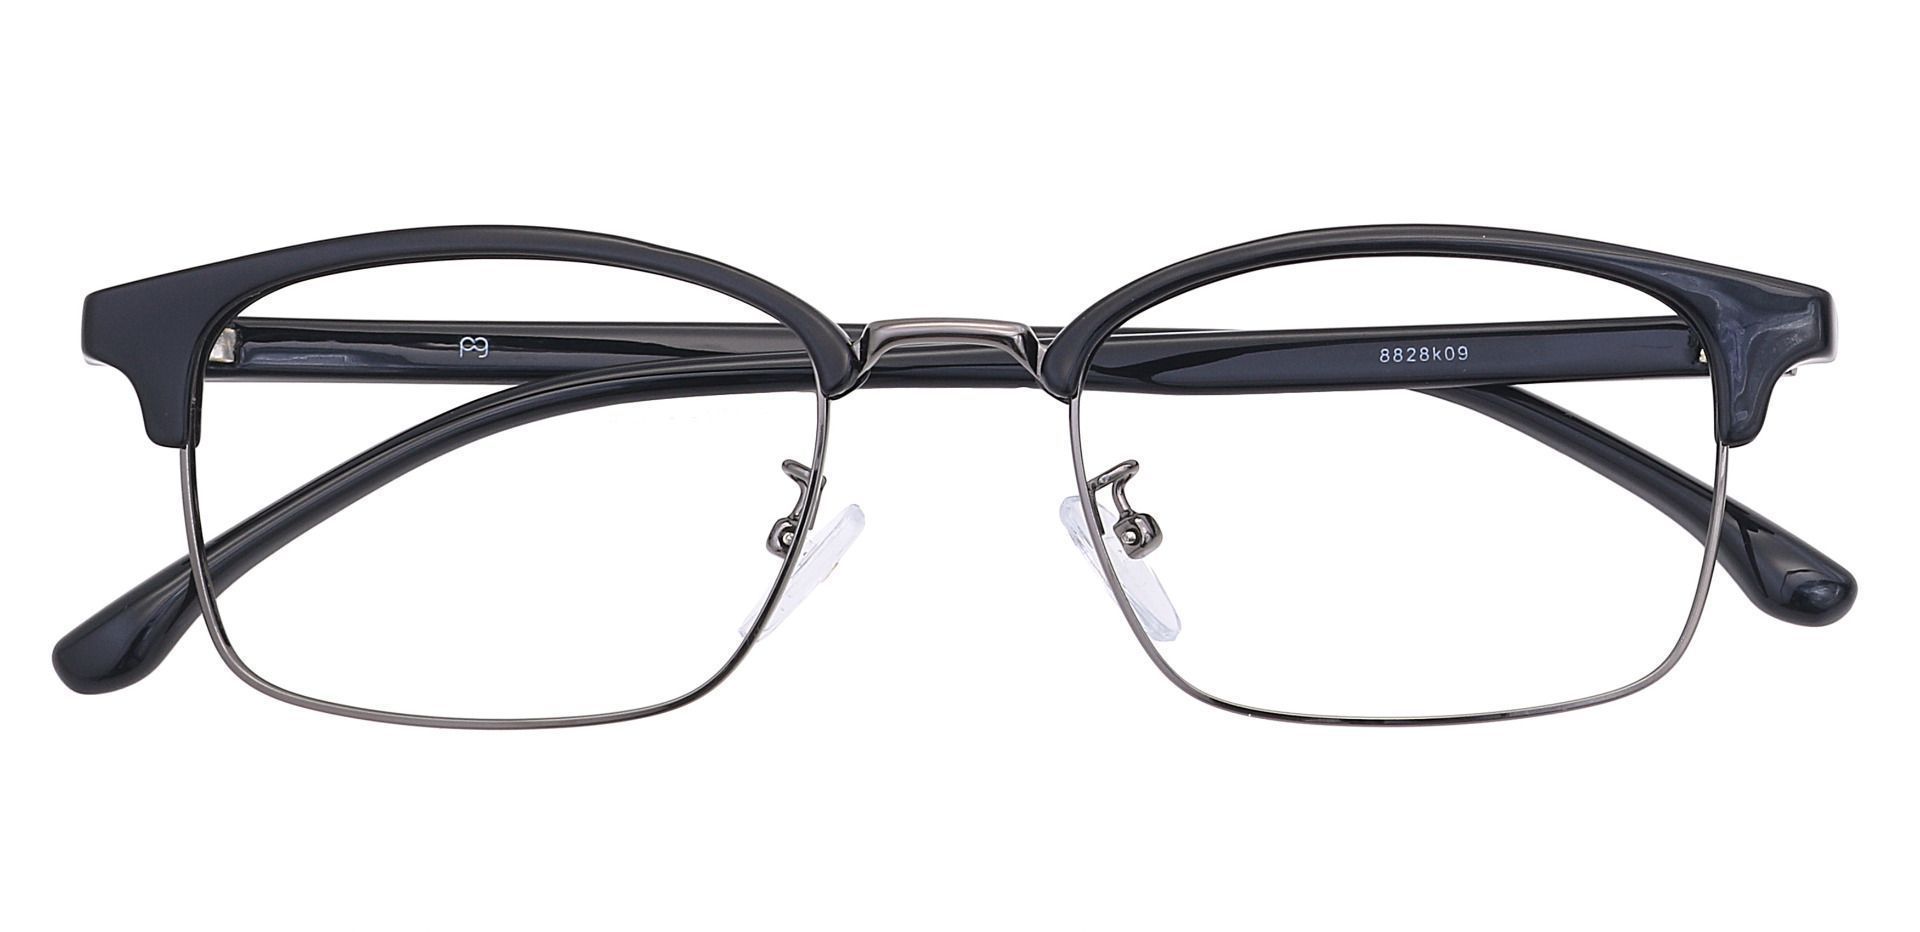 Clover Browline Eyeglasses Frame - Black